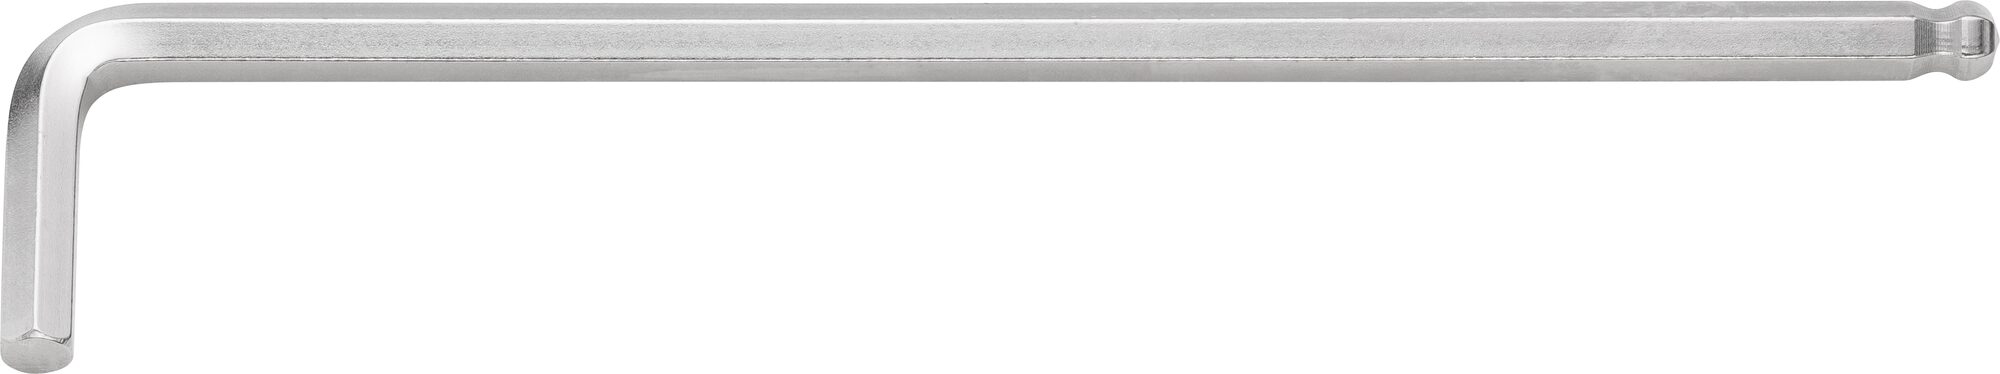 HAZET Winkelschraubendreher 2105LG-07 · Innen Sechskant Profil · 7 mm